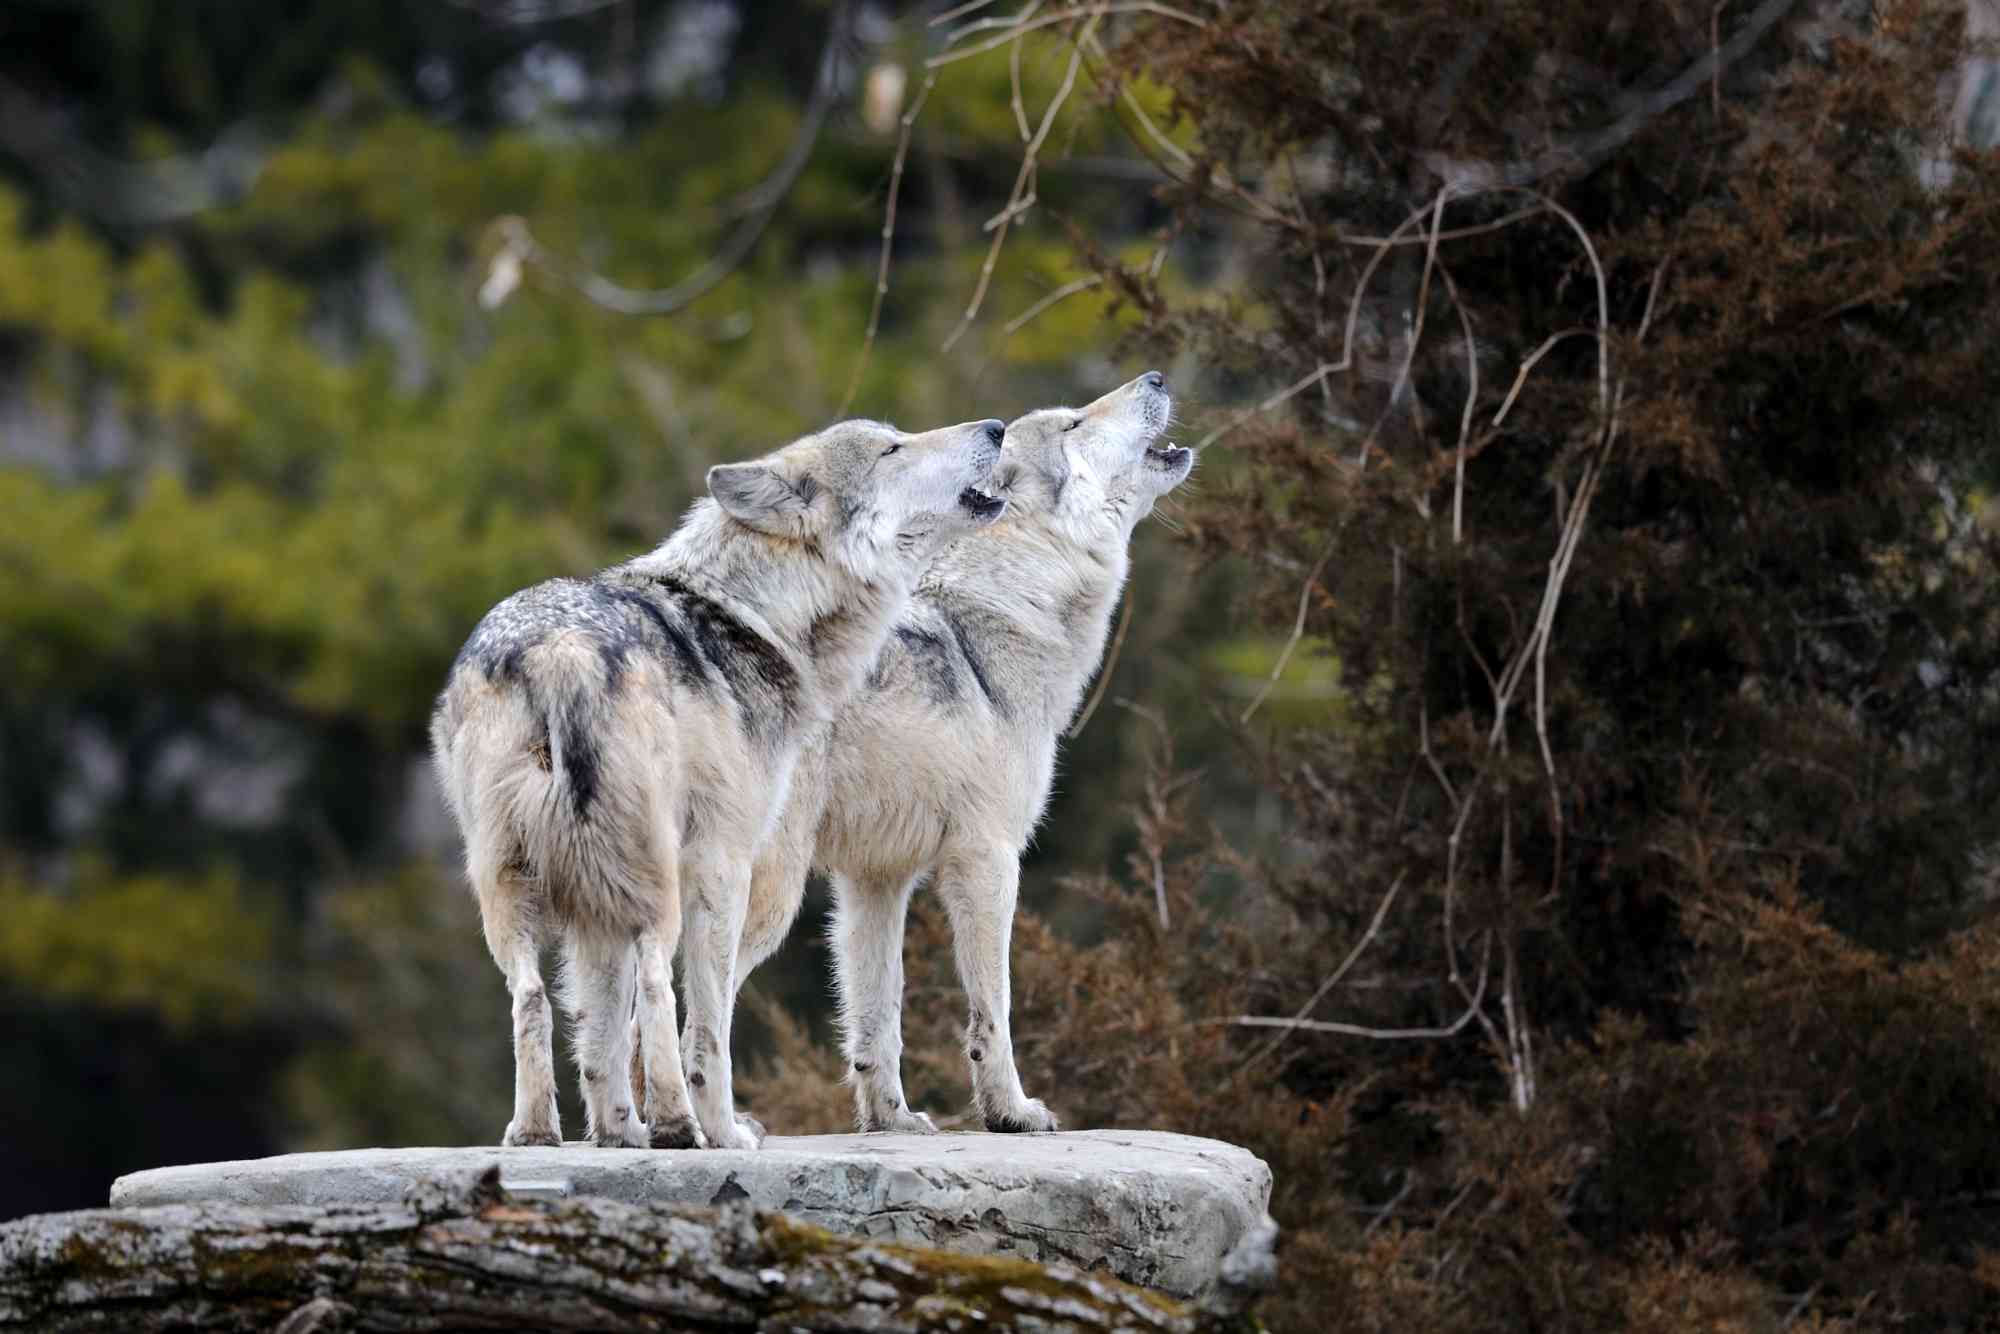  Captive Howling Mexican Gray Wolves - Brookfield Zoo - Glenn Nagel - iStockphoto .jpg